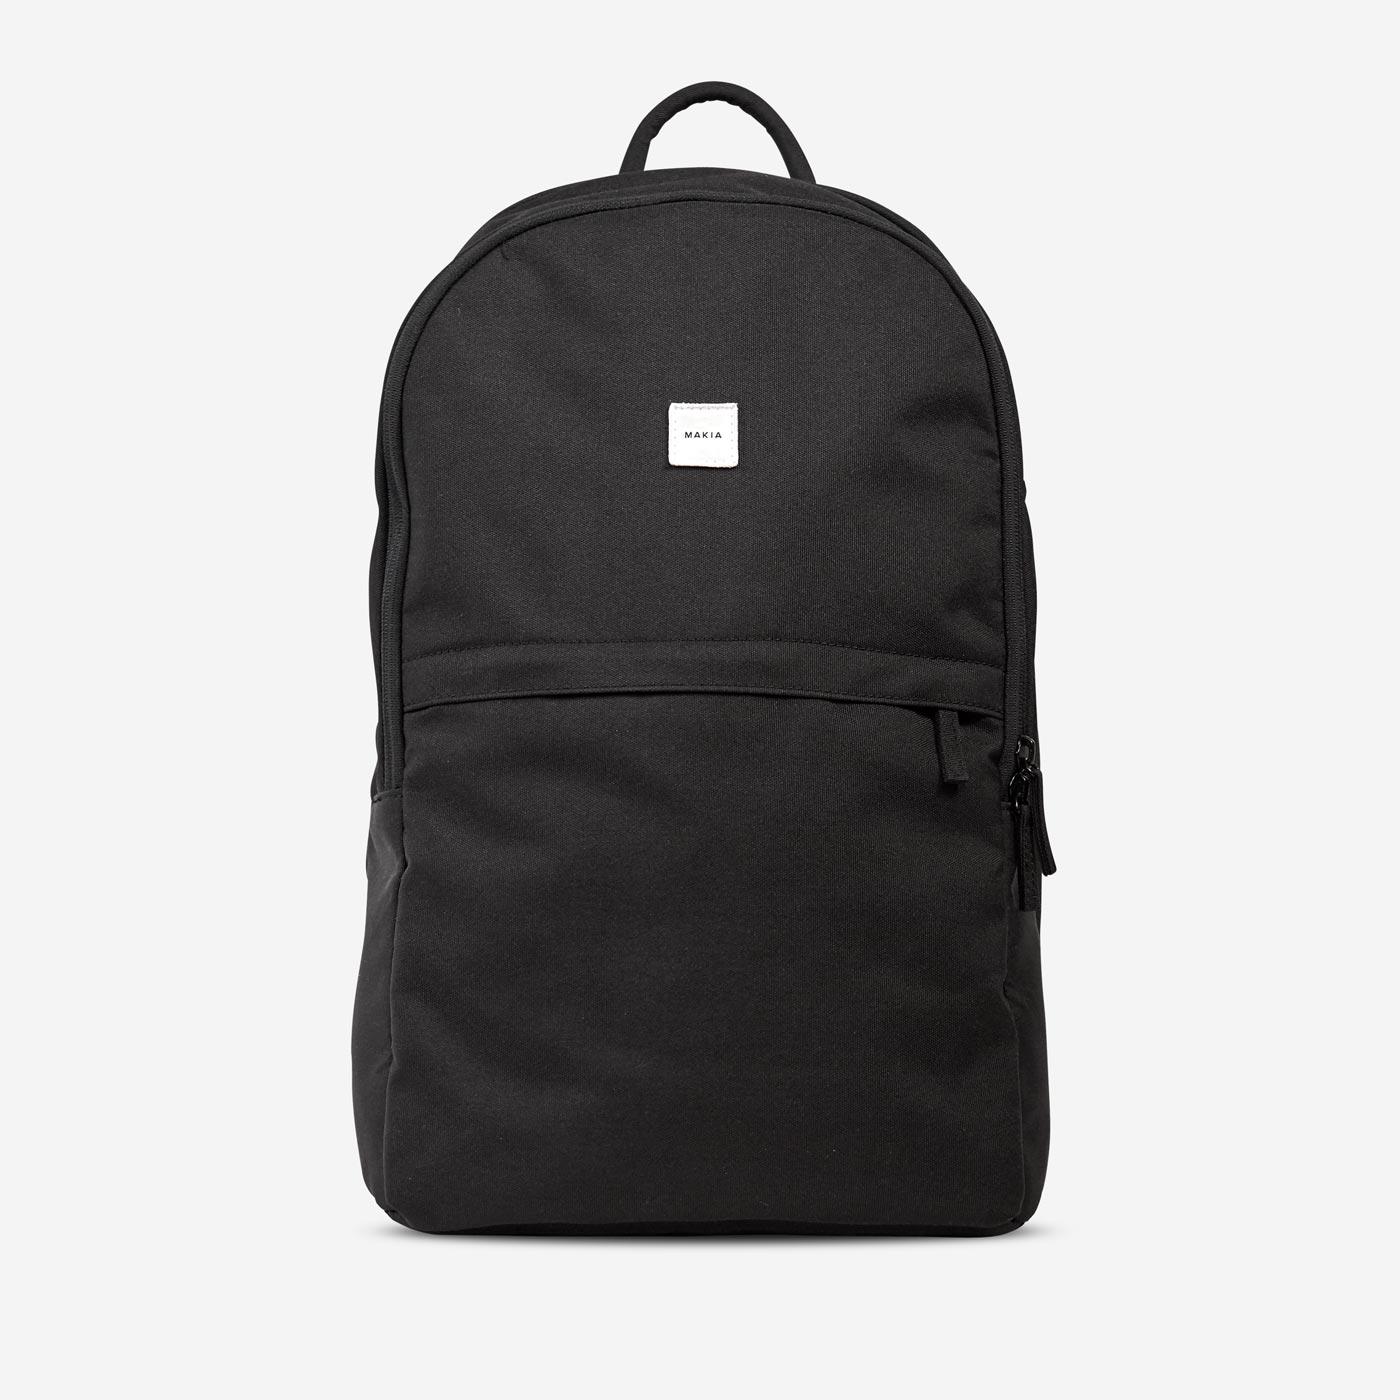 Ahjo Backpack